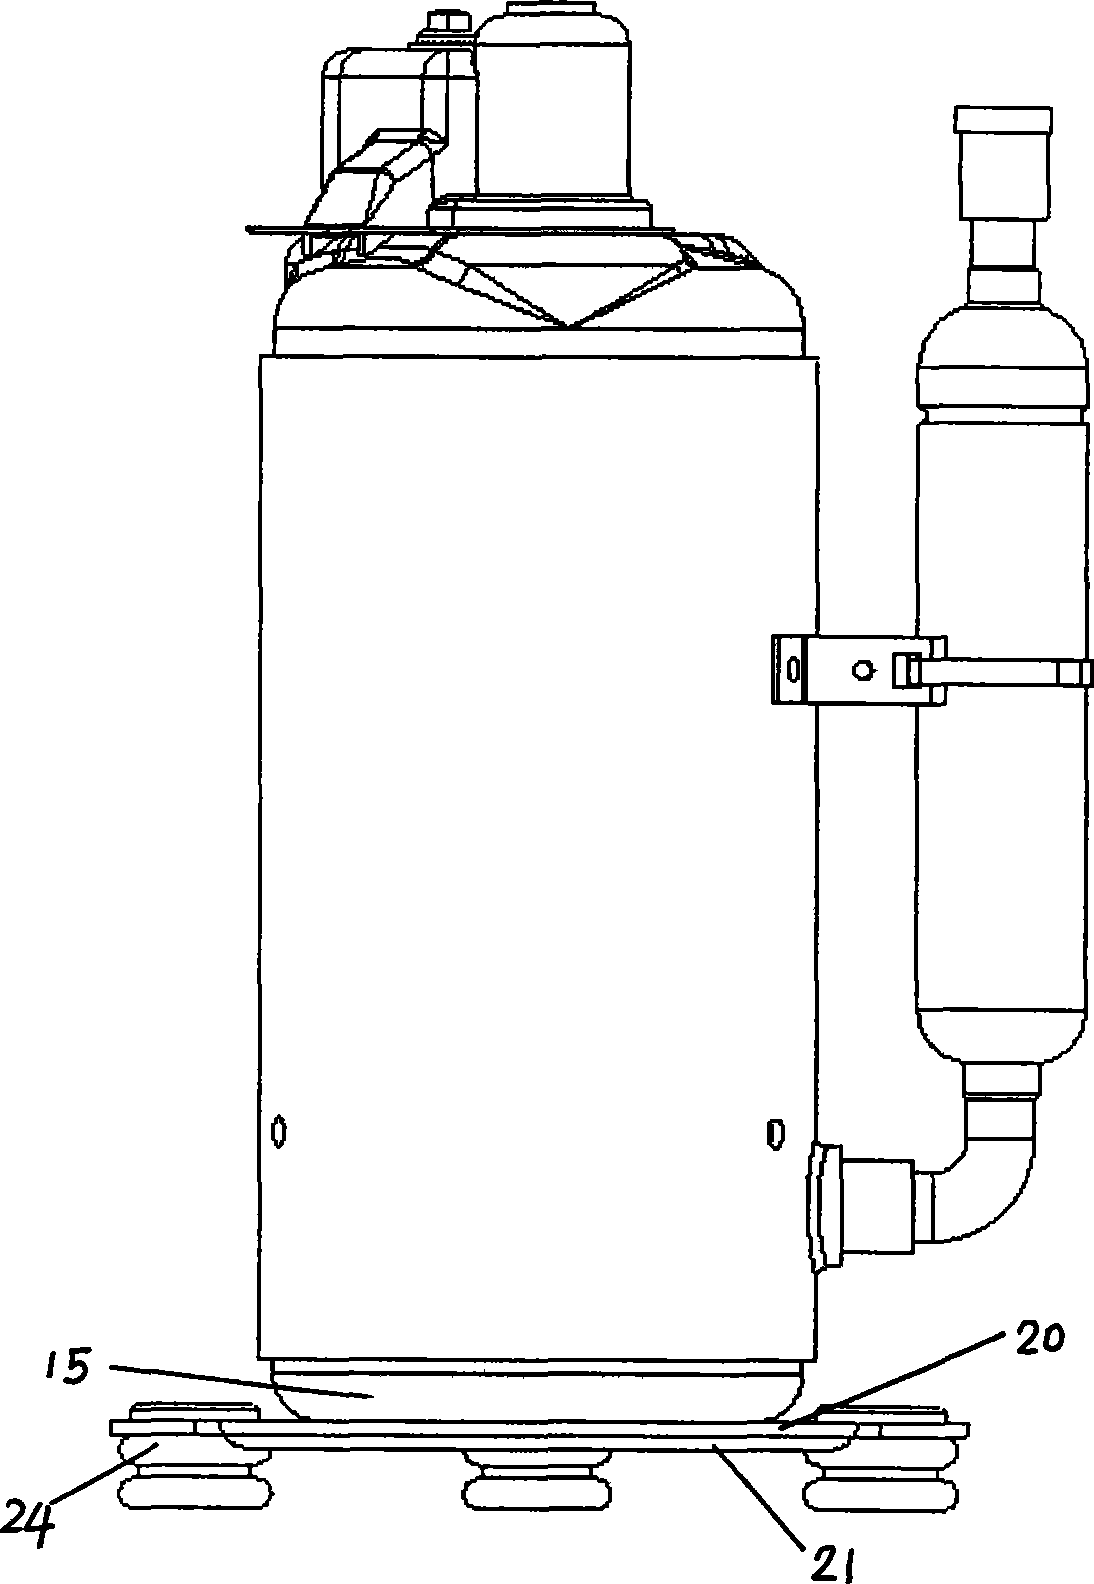 Base corner of rotary compressor